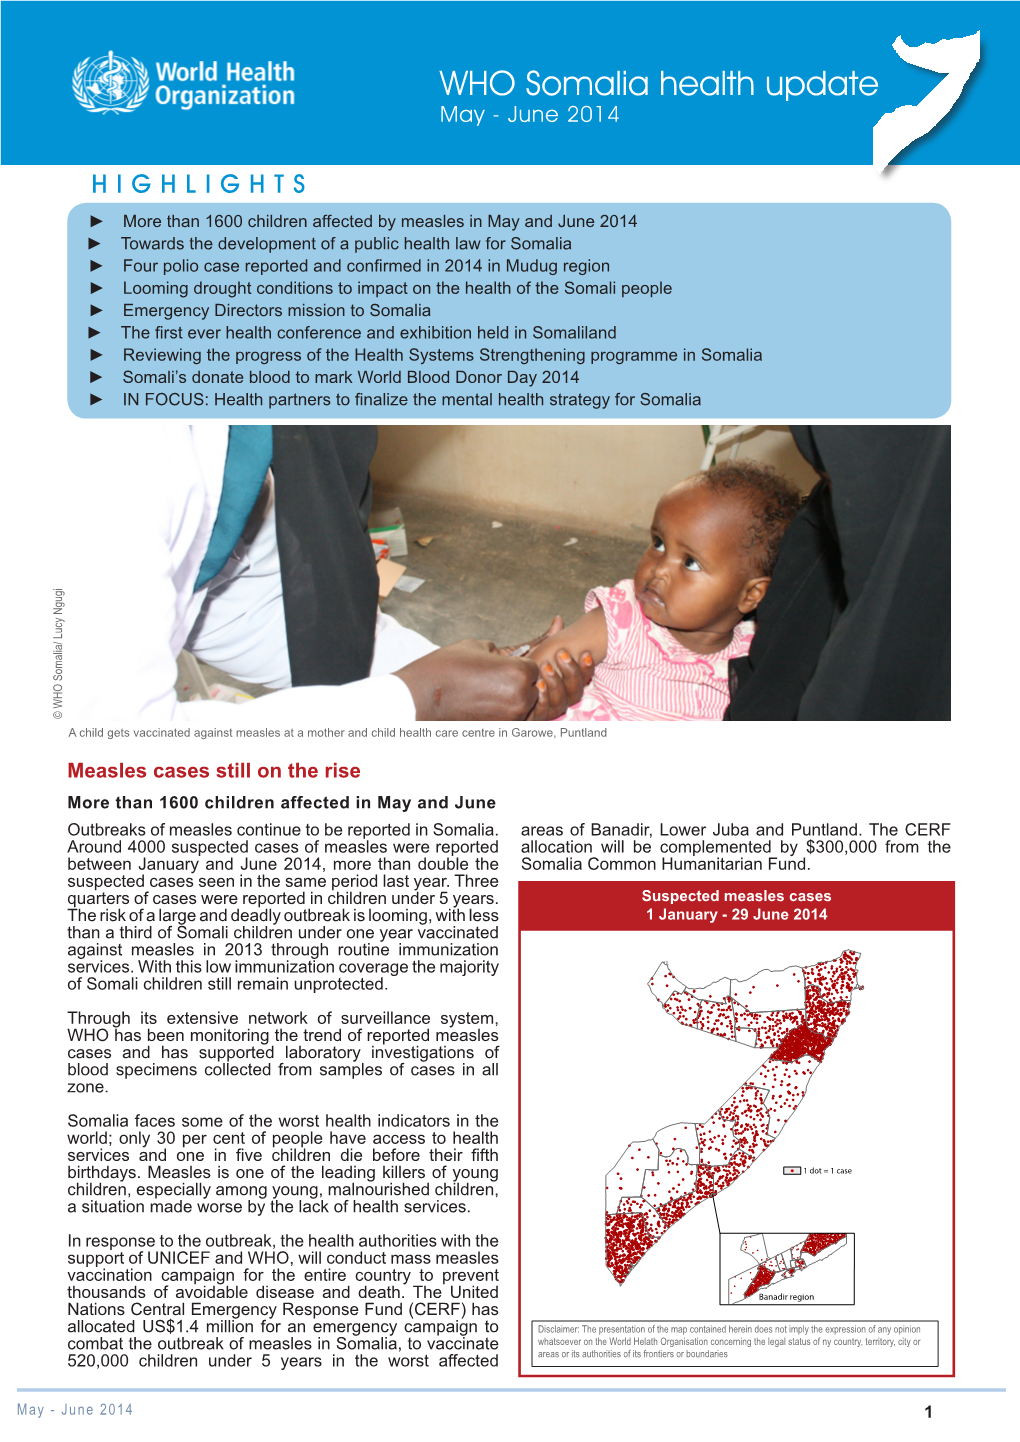 WHO Somalia Health Update May - June 2014